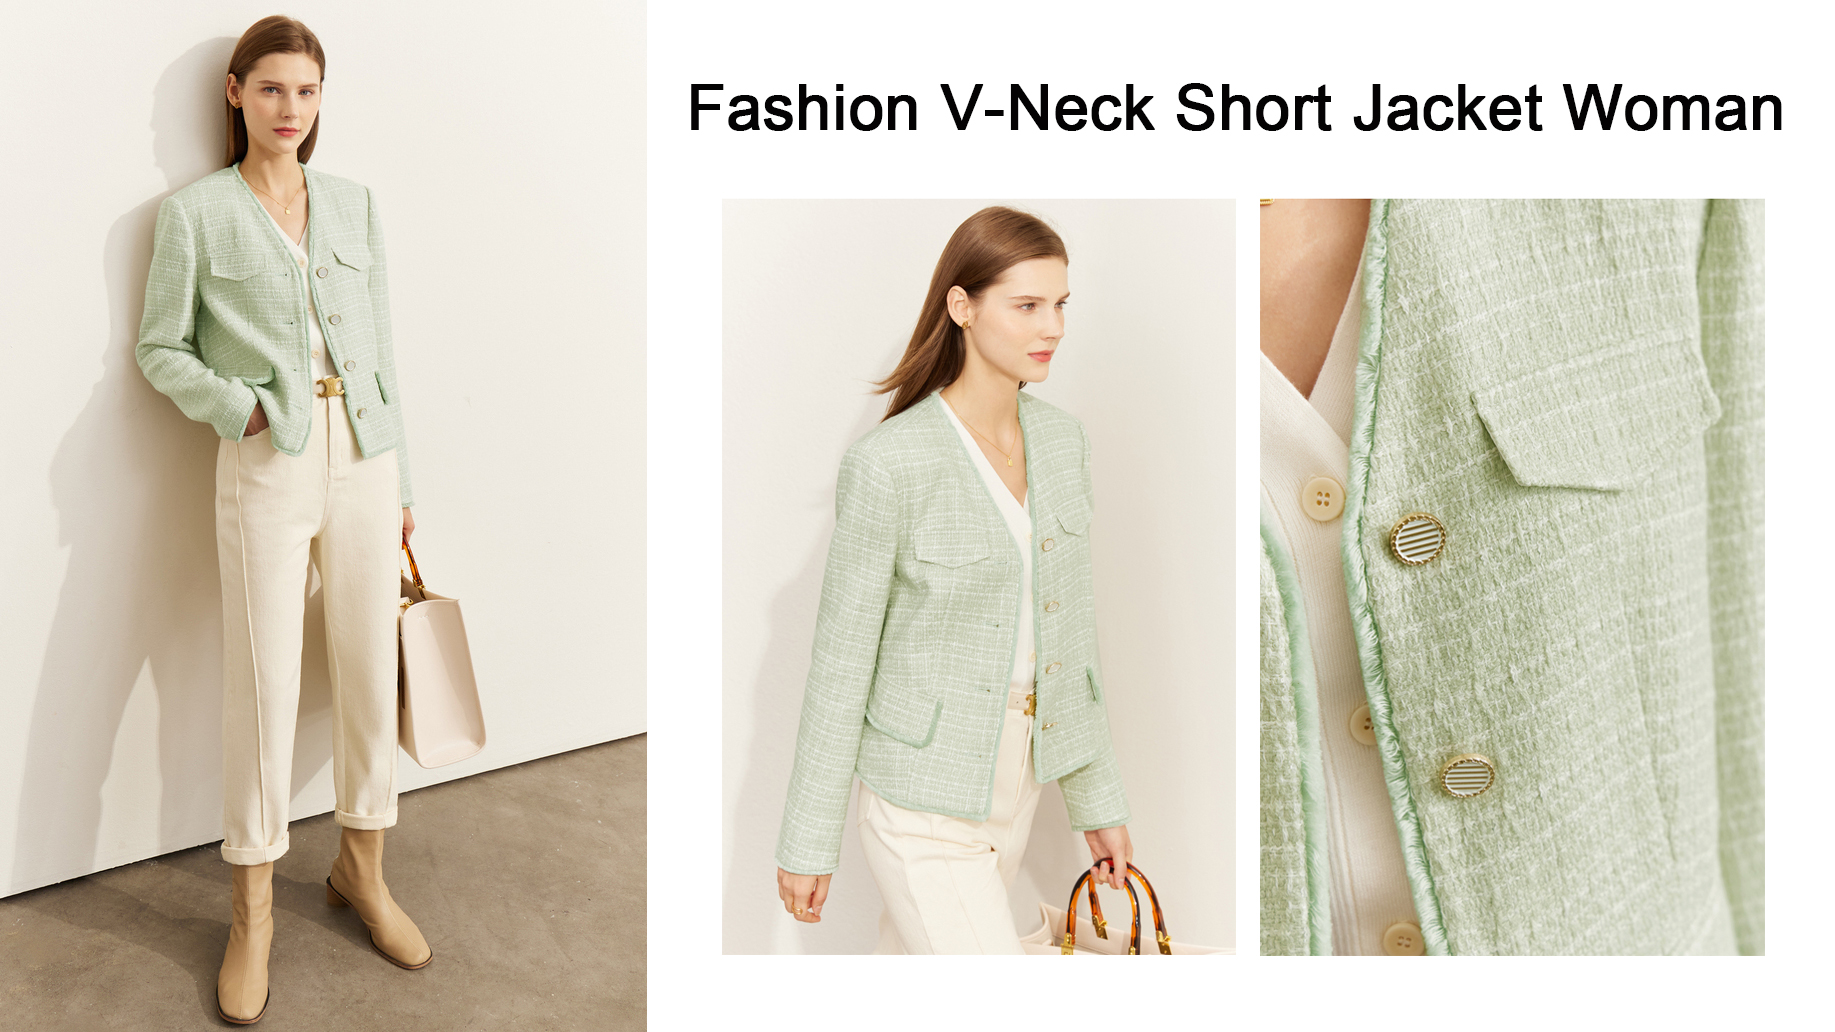 Quality Fashion V-Neck Short Jacket Woman Manufacturer |Auschalink